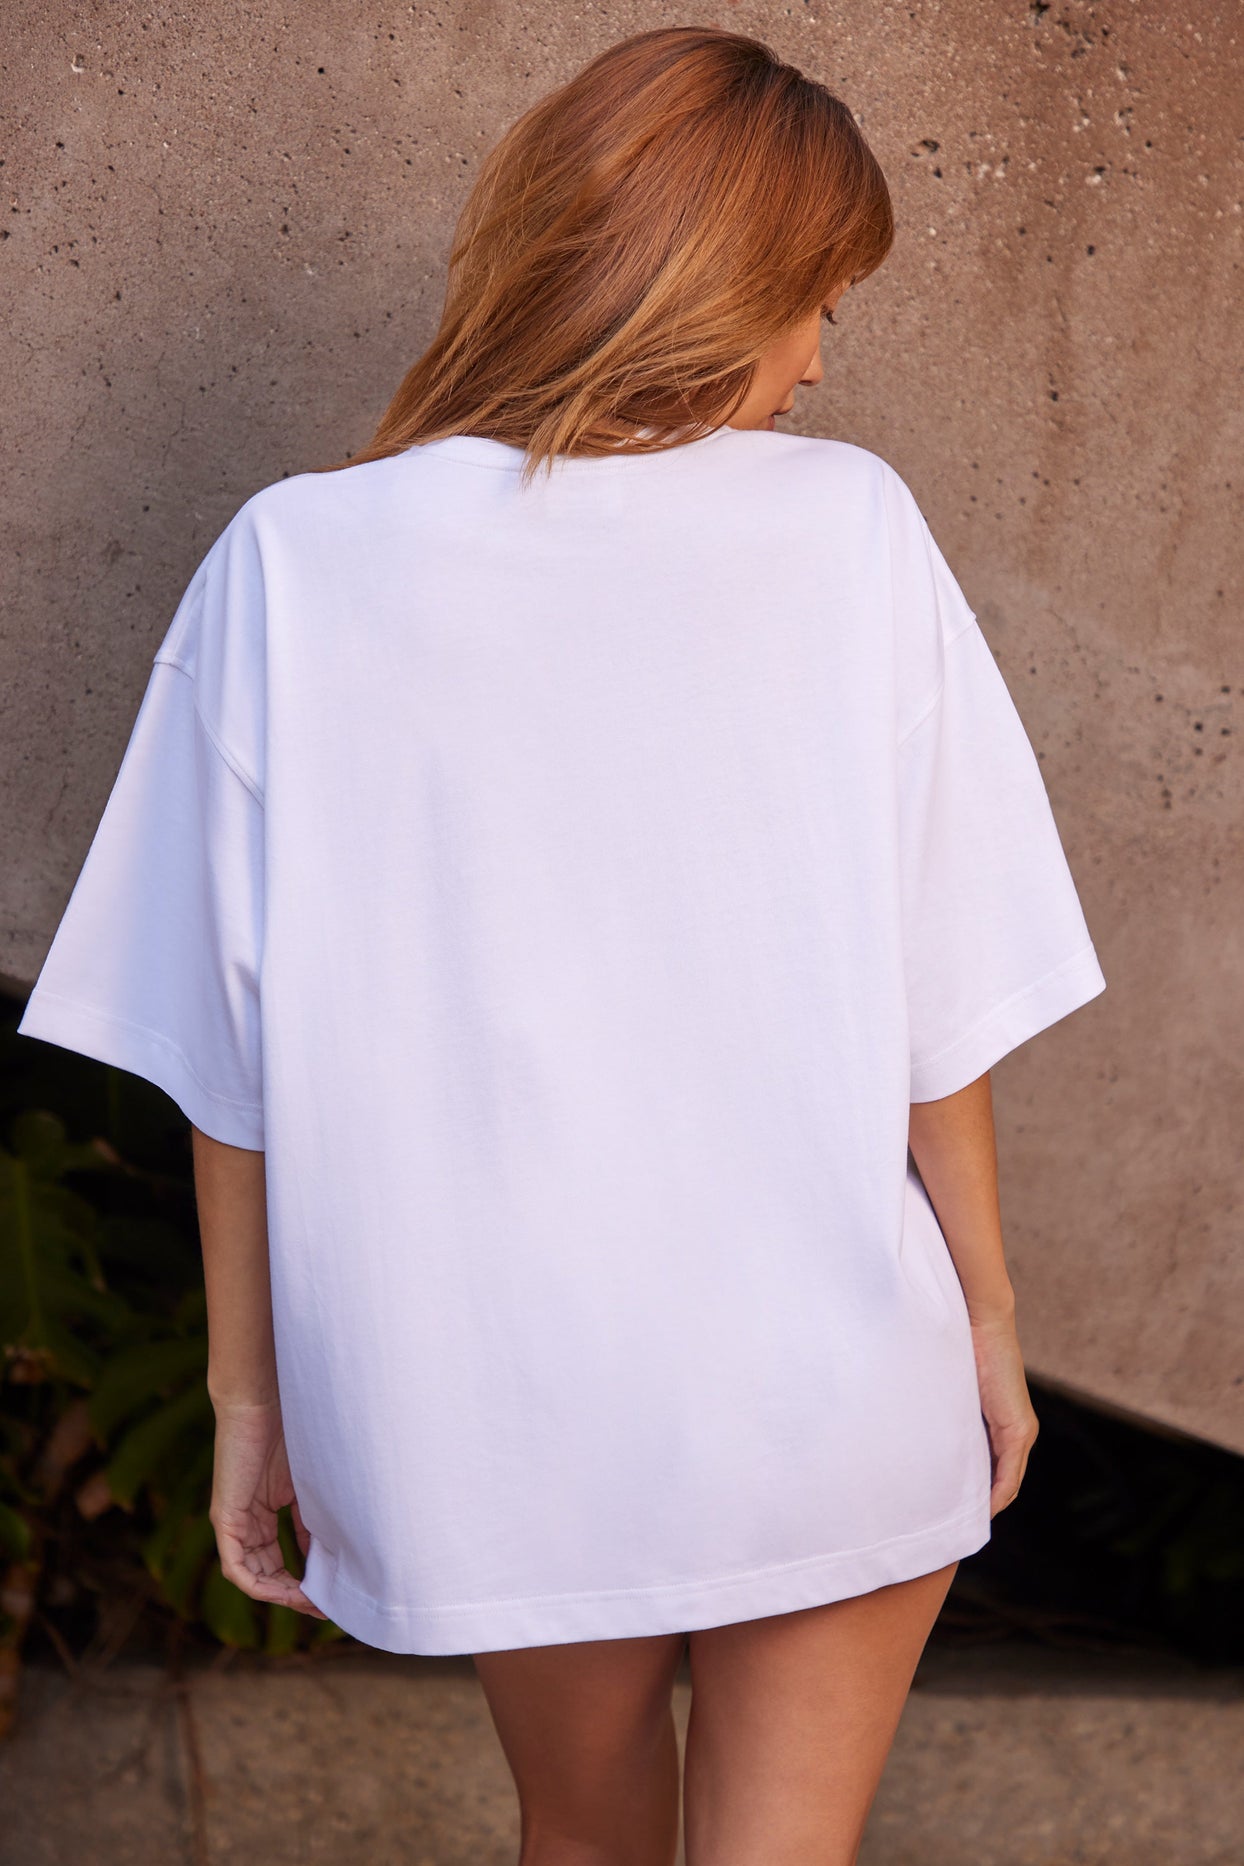 Camiseta extragrande de manga corta en blanco